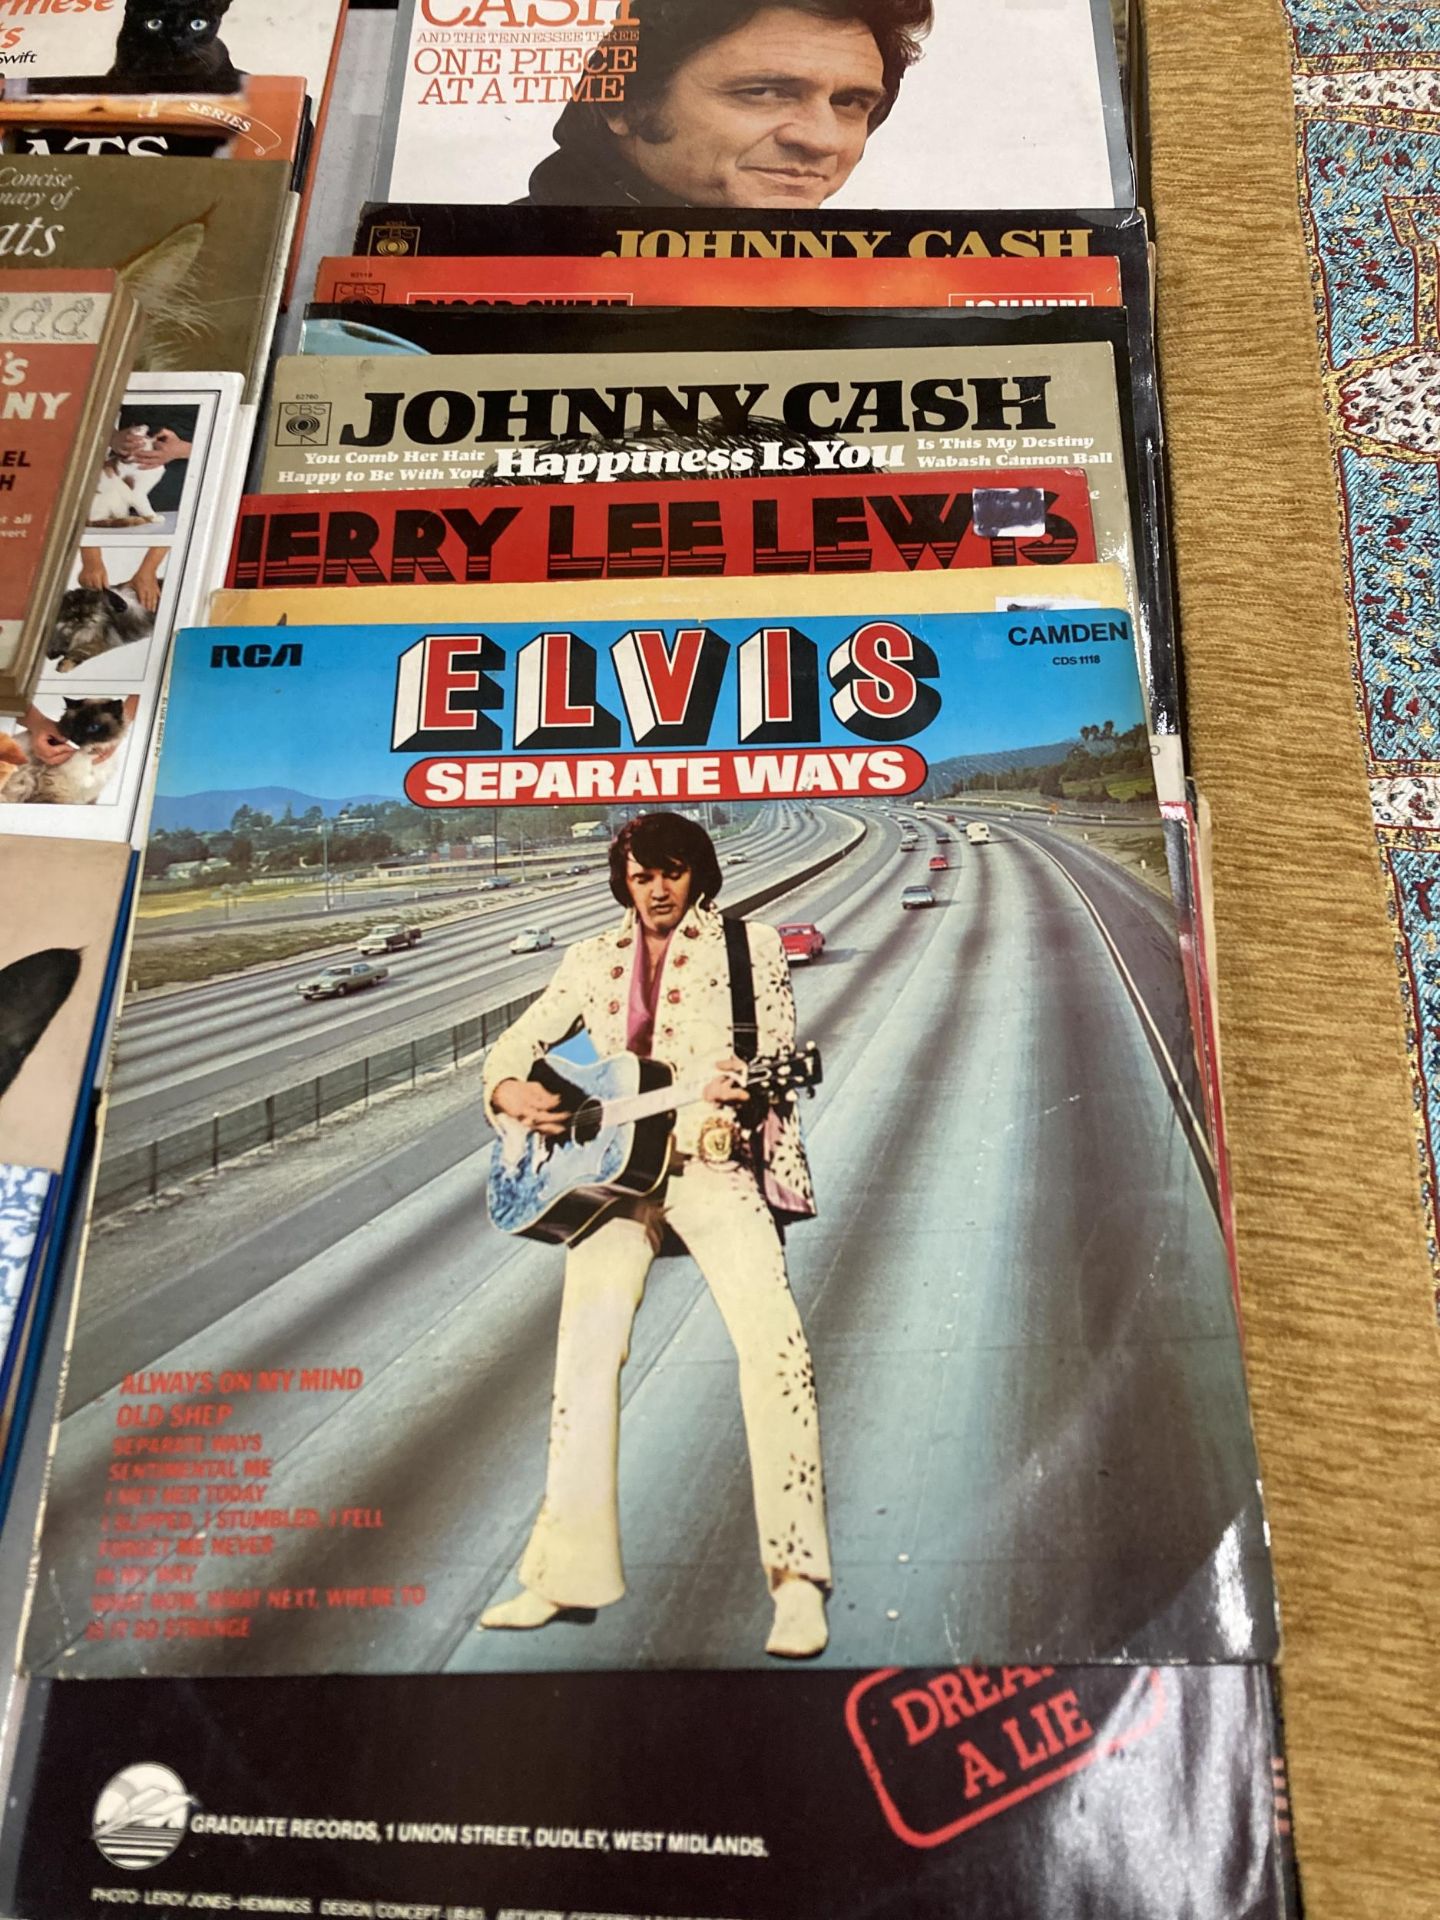 A COLLECTION OF LP RECORDS, ELVIS PRESLEY, JOHNNY CASH ETC